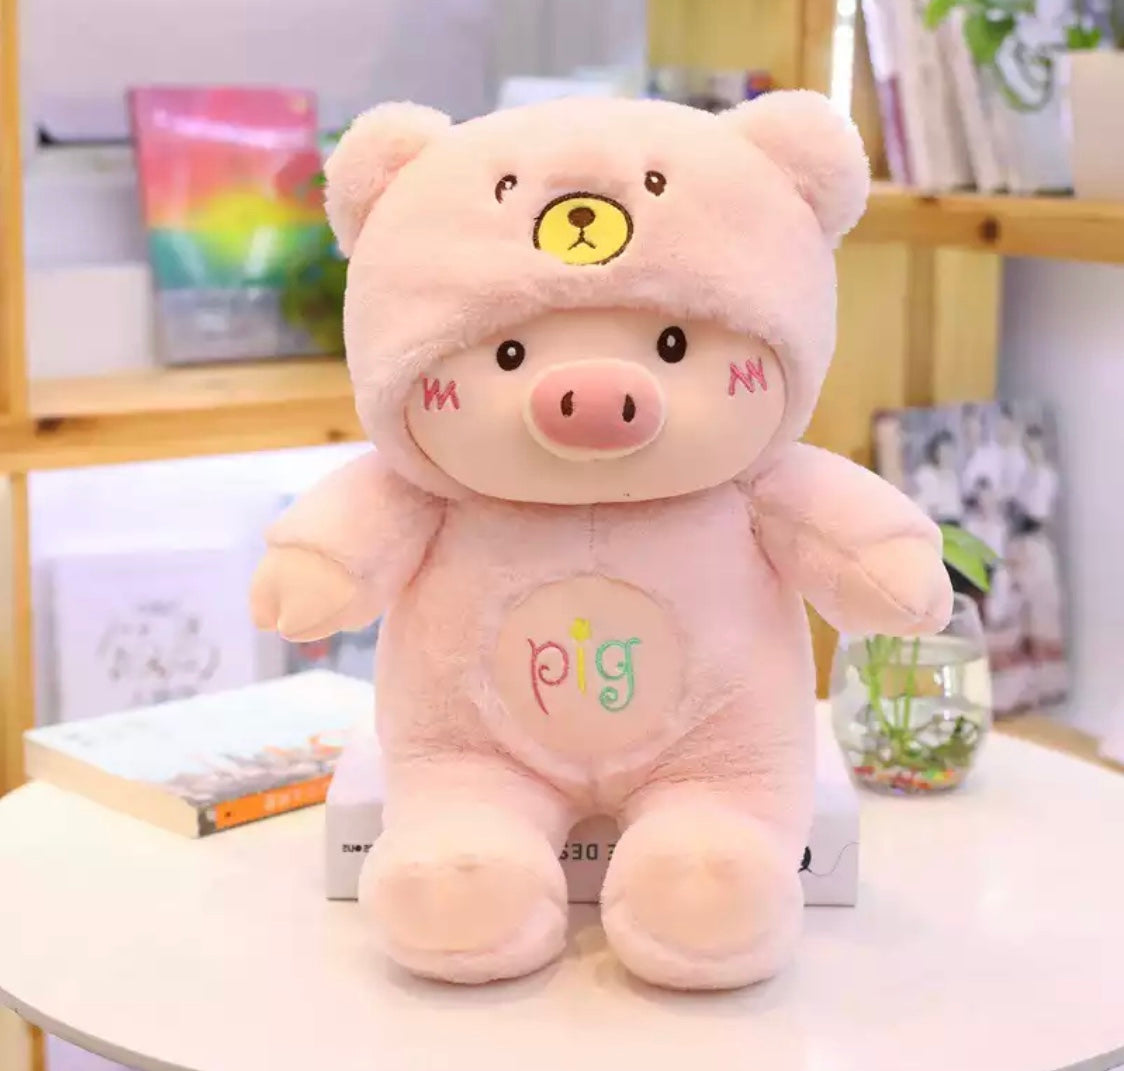 Piggy Plush